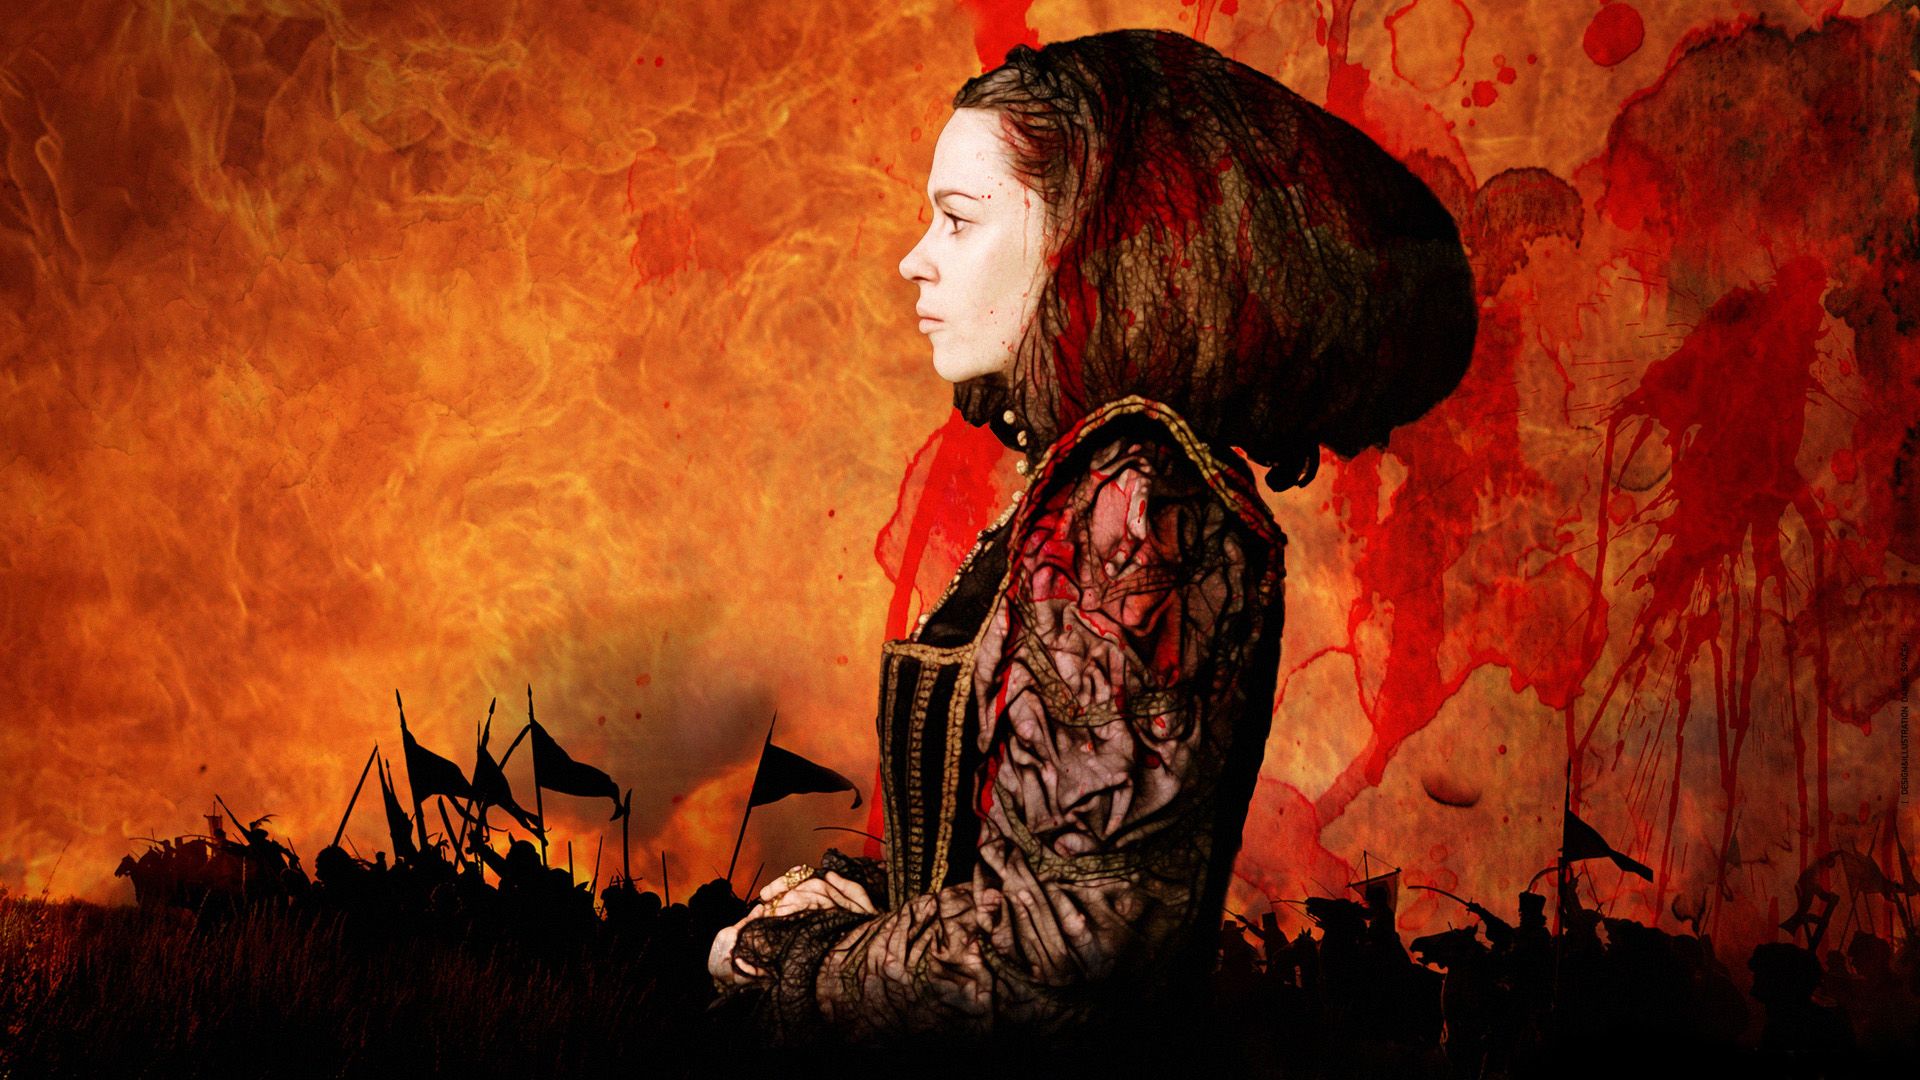 Bathory: Countess of Blood background